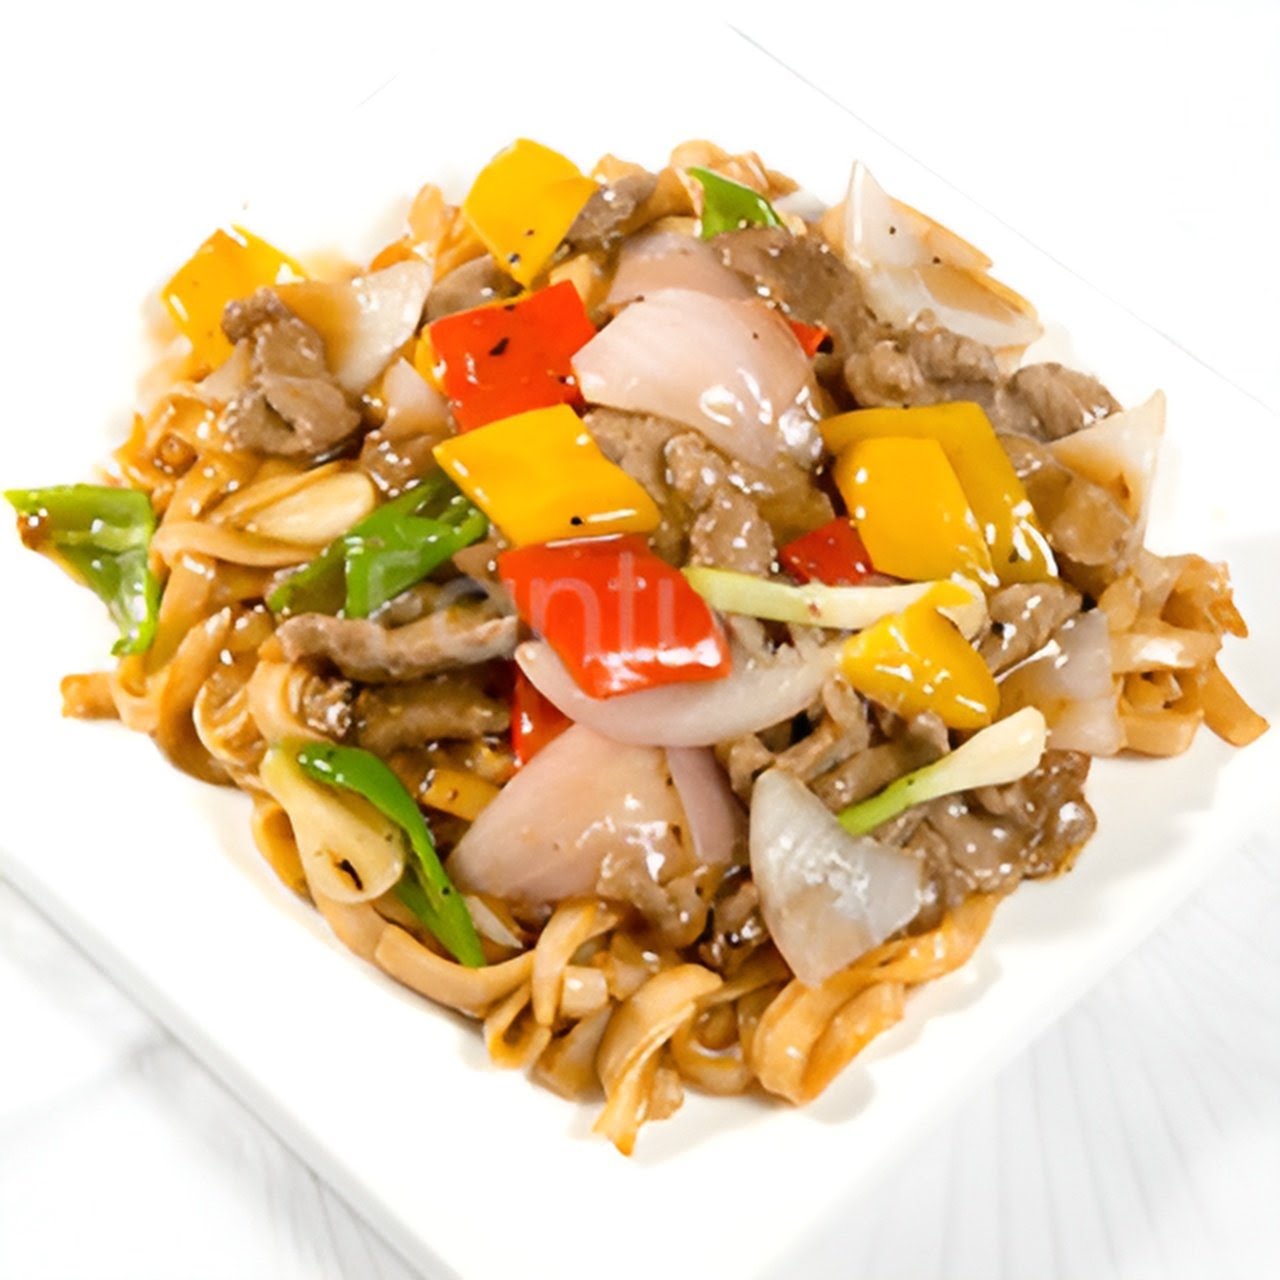 King's Noodle Restaurant by Google